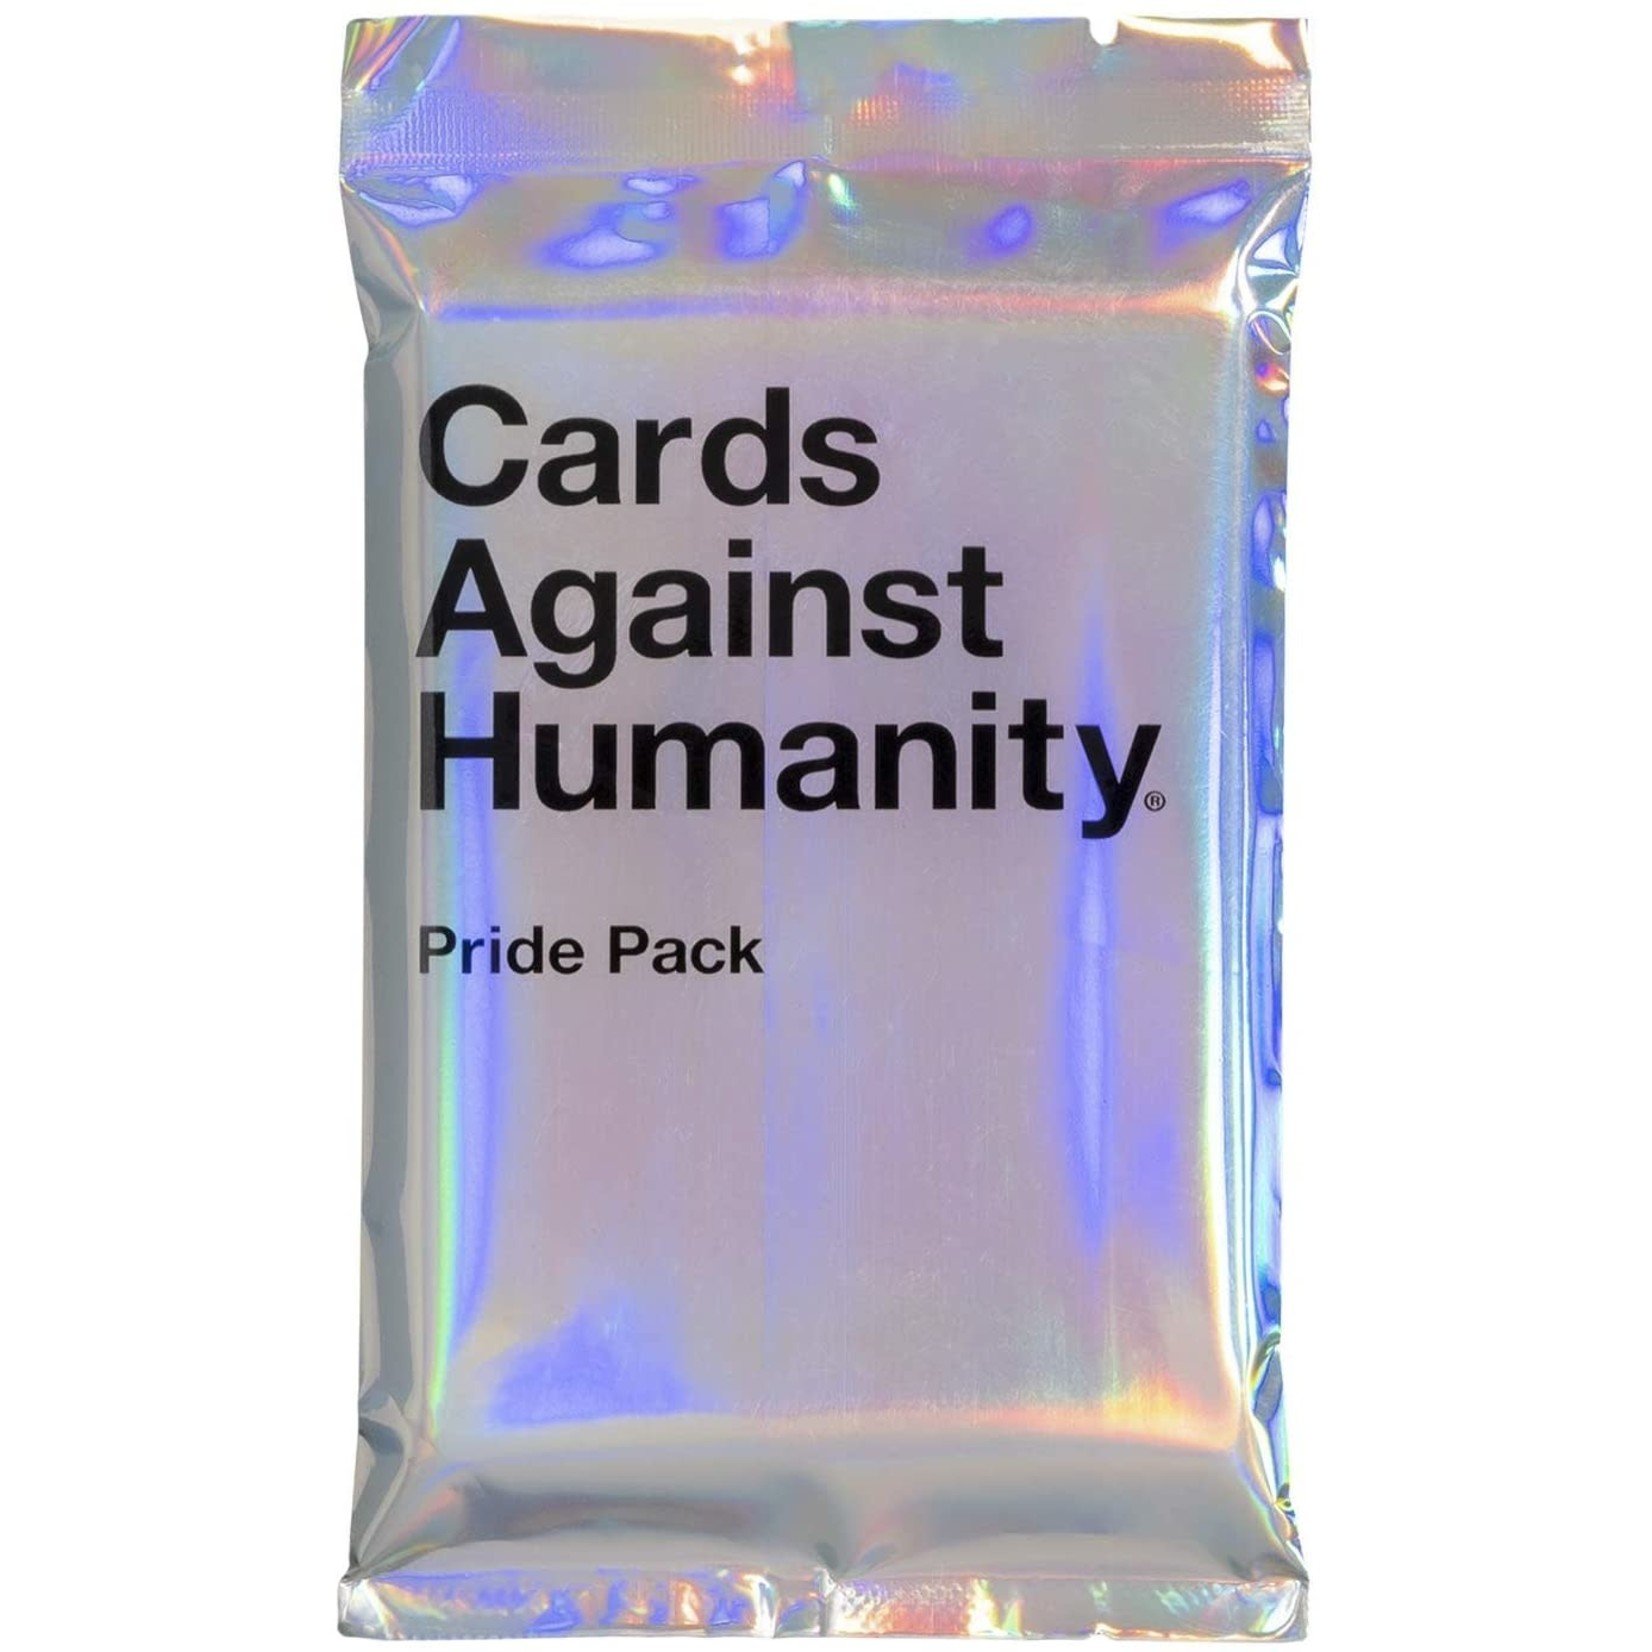 Cards Against Humanity Cards Against Humanity Pride Pack